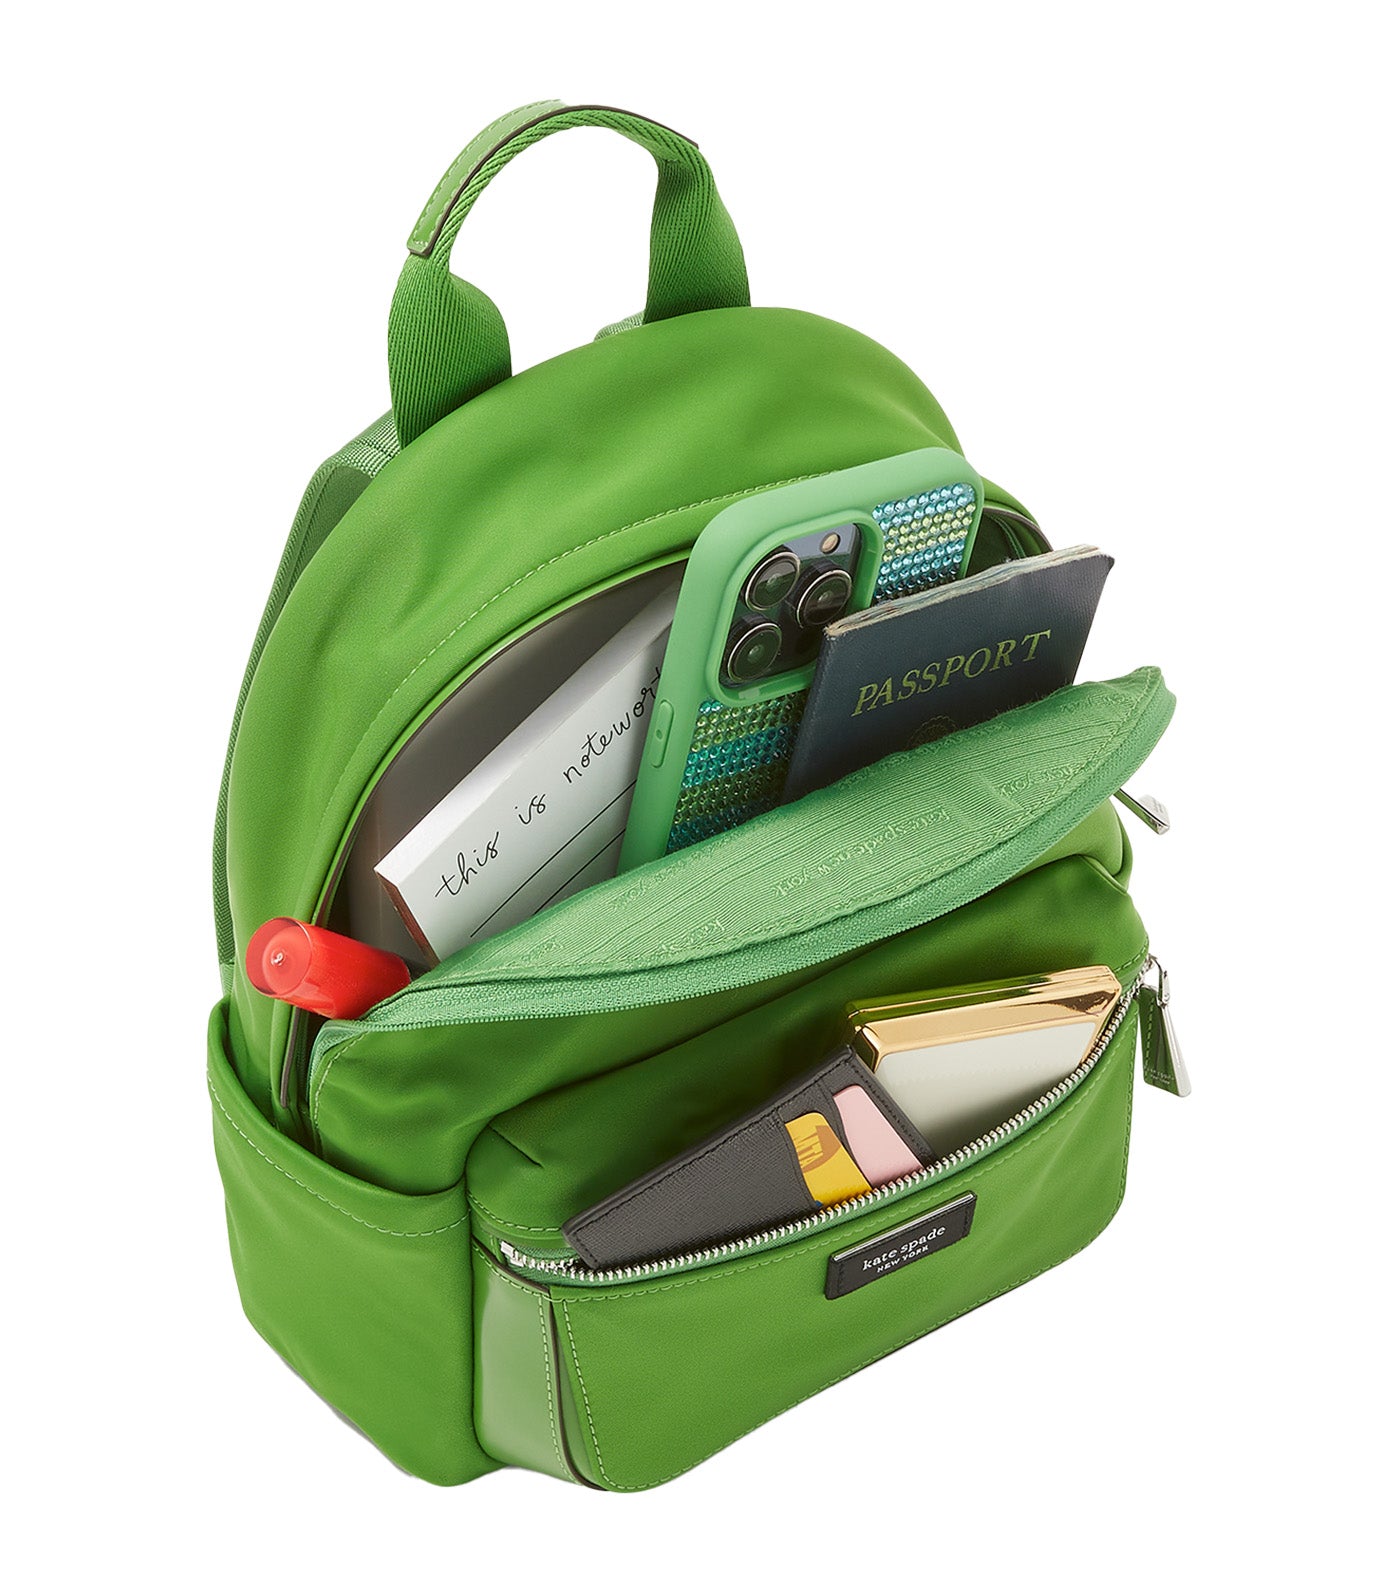 Sam Icon KSNYL Small Backpack KS Green